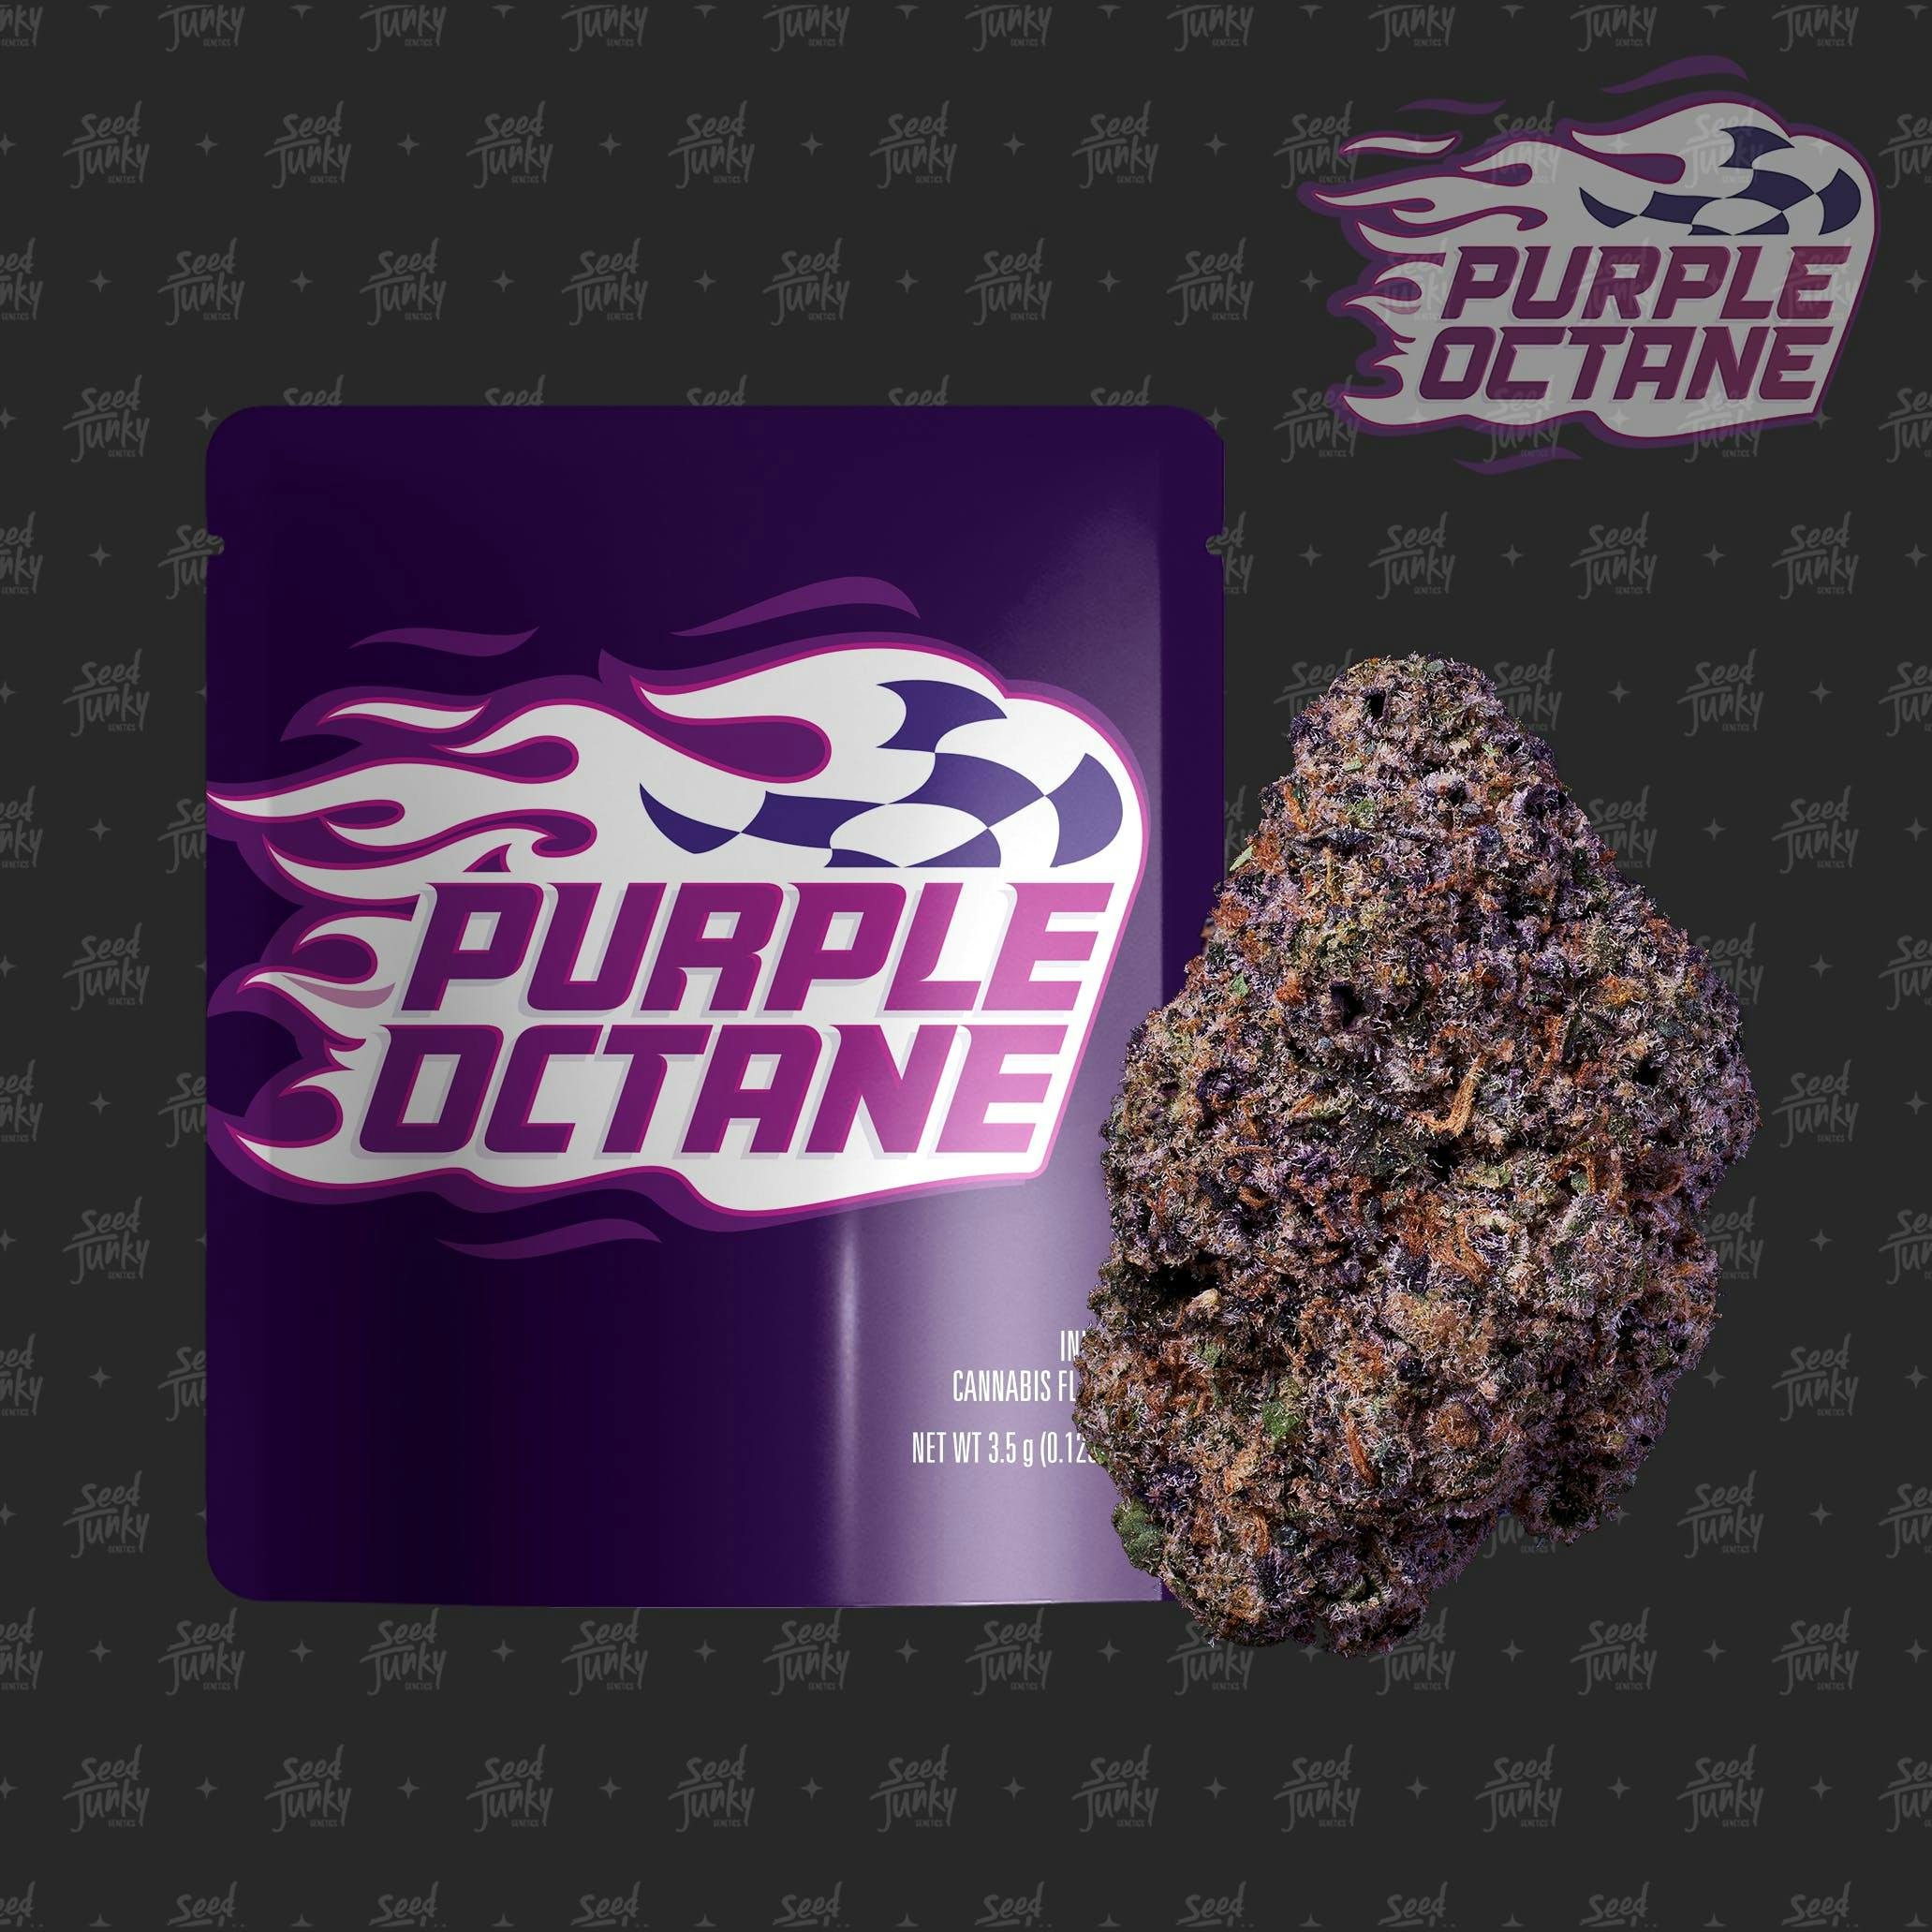 Purple Octane Strain